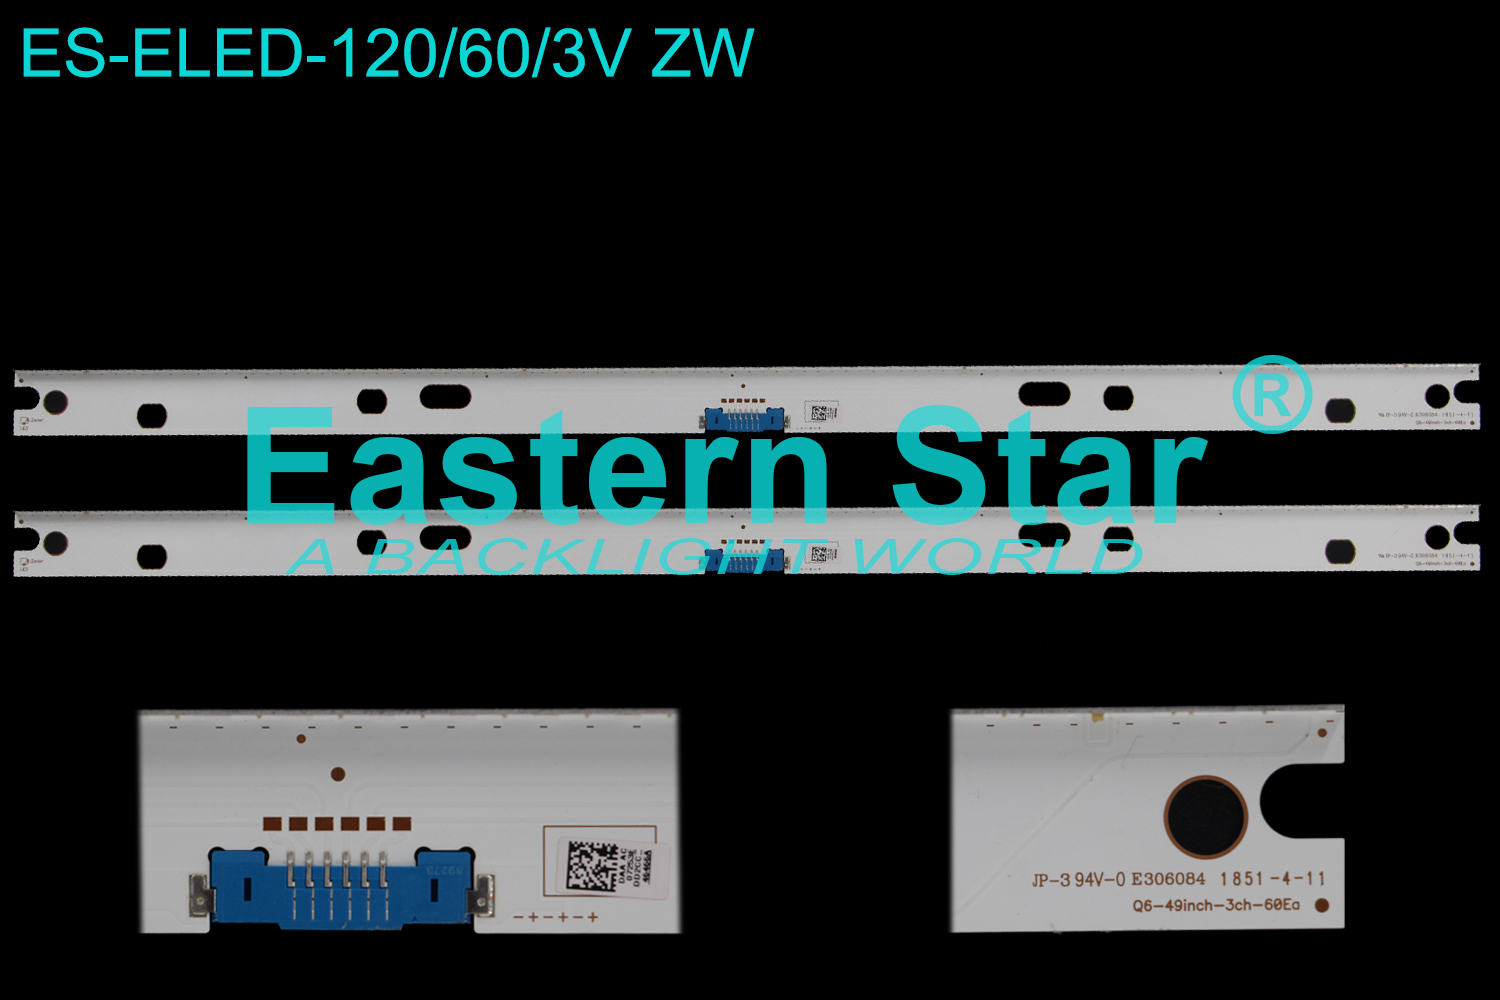 ES-ELED-120 ELED/EDGE TV backlight 49'' use for Samsung 60LEDs Q6-49inch-3ch-60Ea (2）